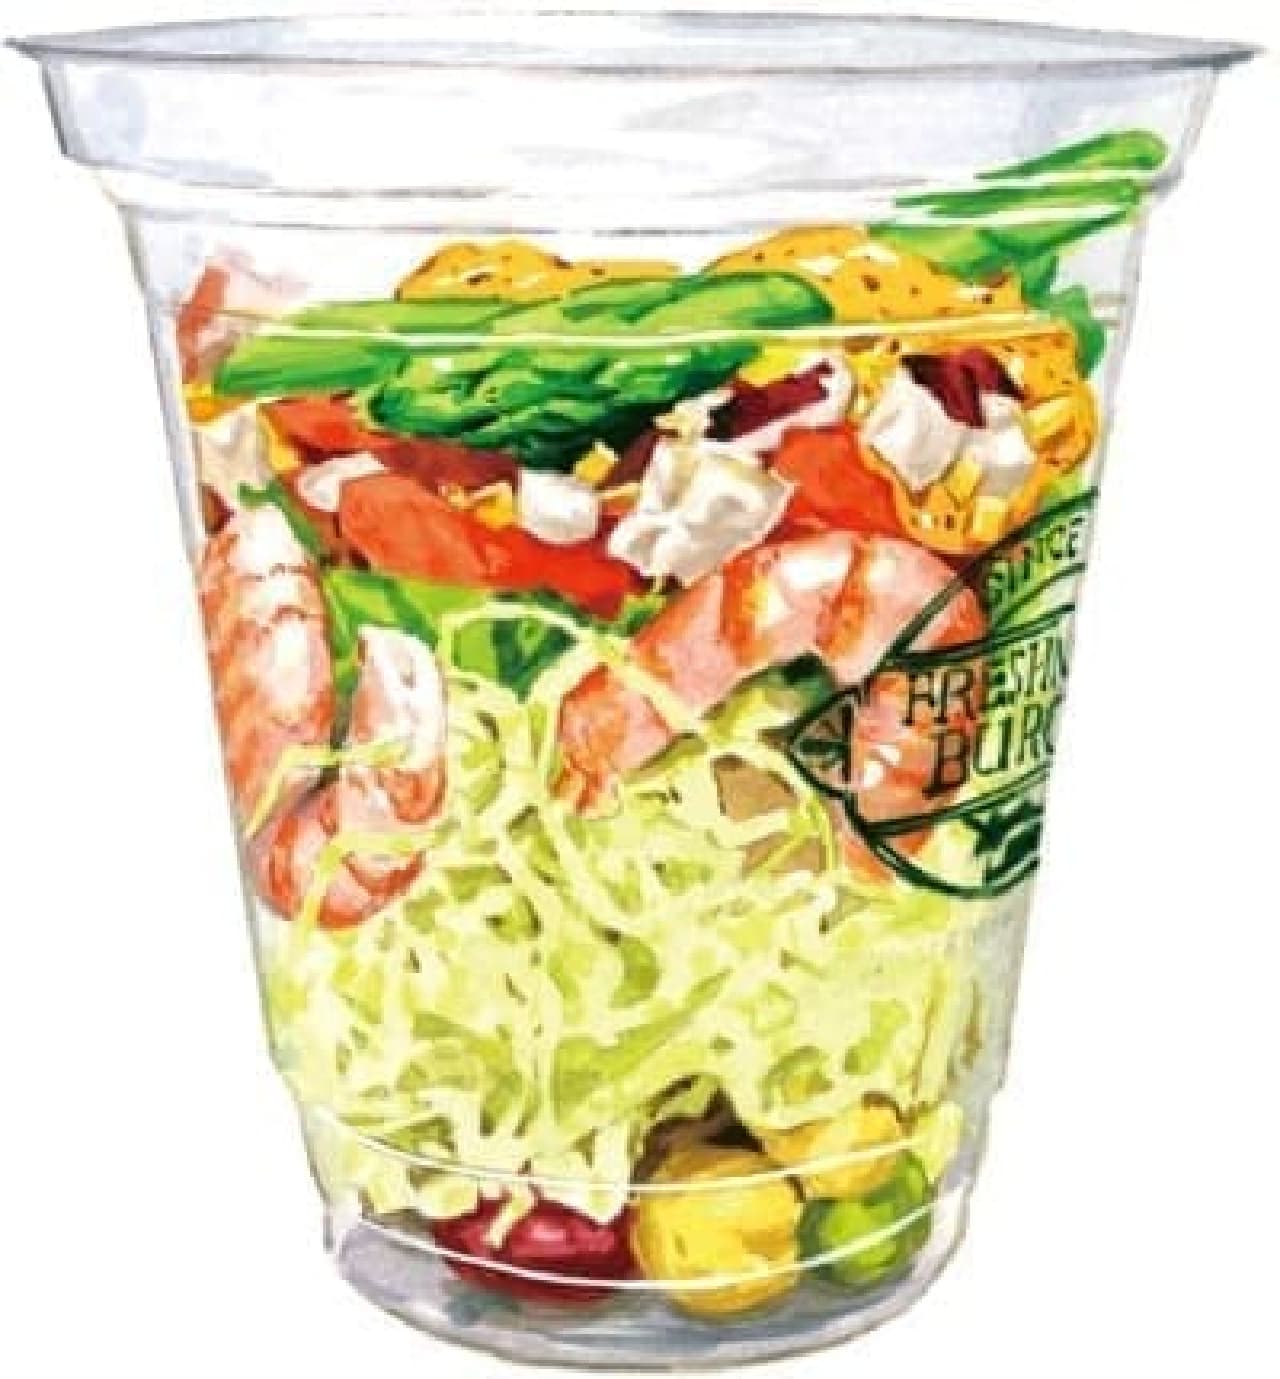 Cobb salad (image)